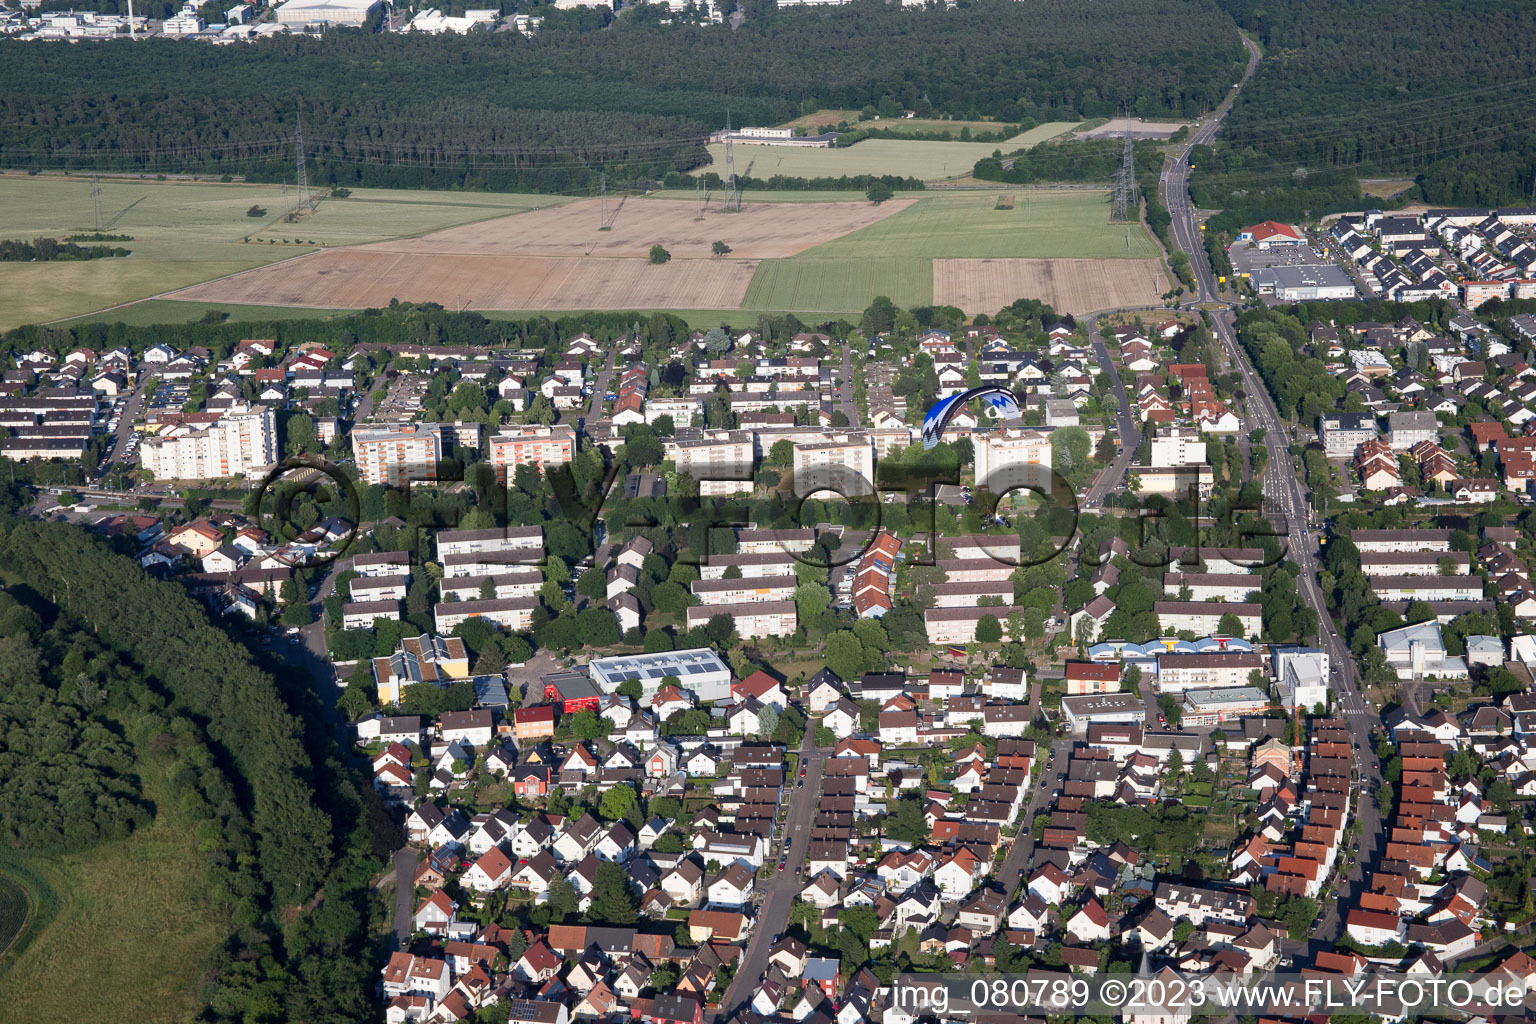 District Leopoldshafen in Eggenstein-Leopoldshafen in the state Baden-Wuerttemberg, Germany from above